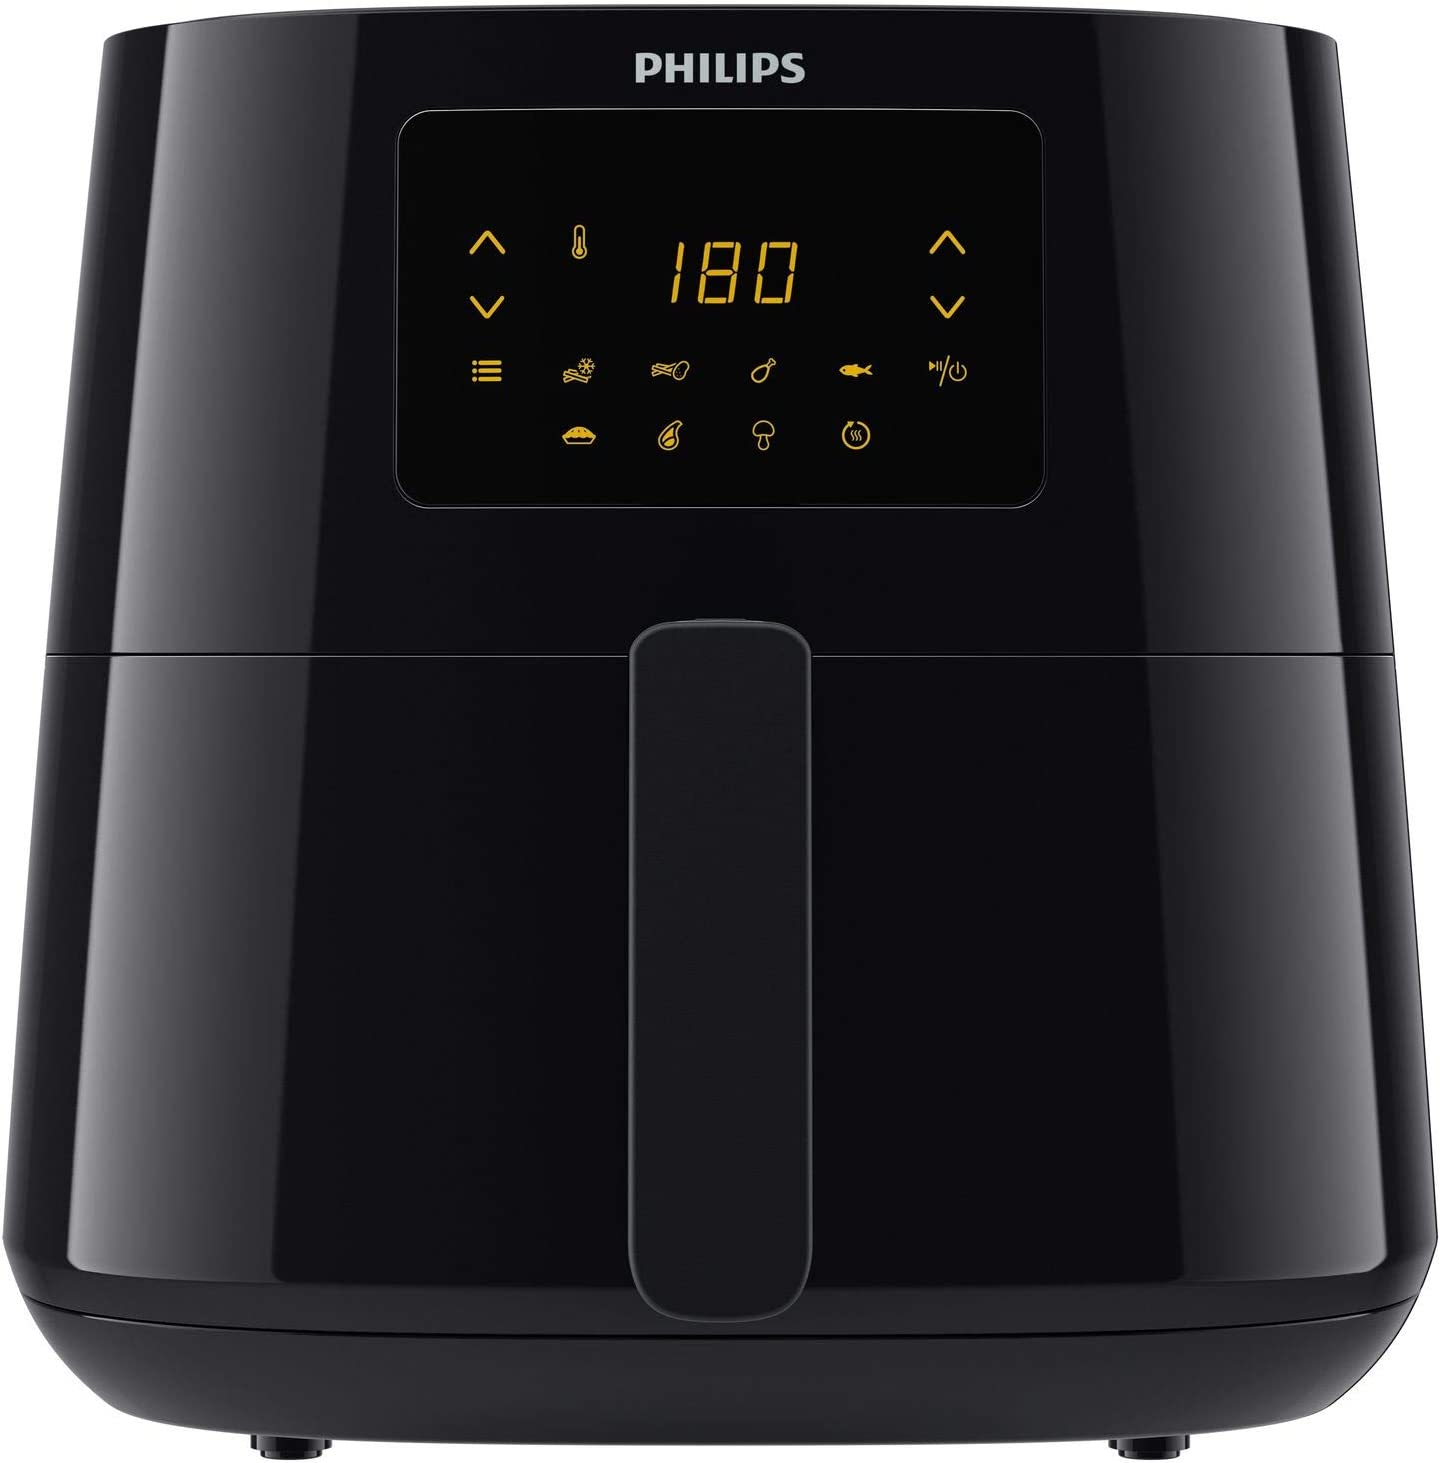 سرخ کن فیلیپس مدل PHILIPS HD9270 - ارسال ۱۰ الی ۱۵ روز کاری